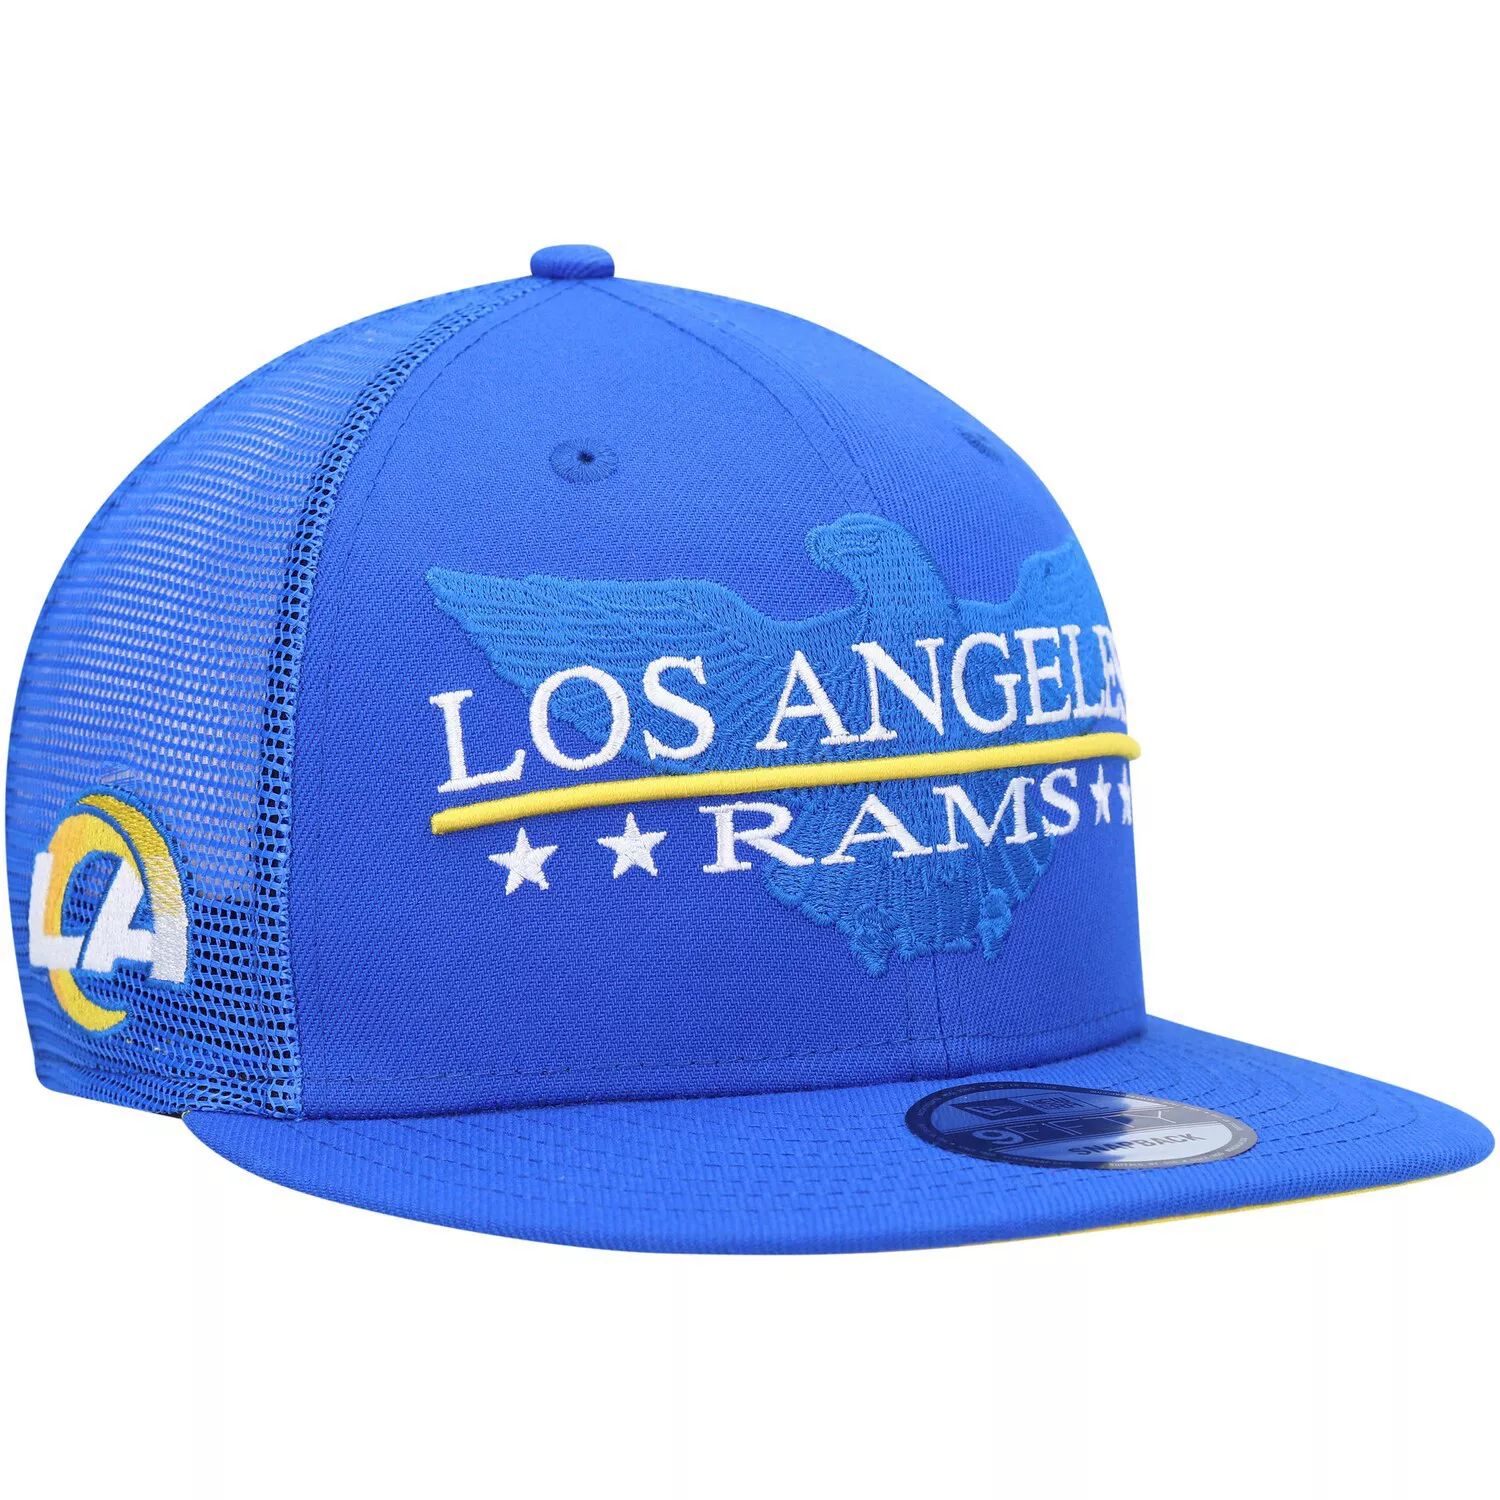 Мужская кепка New Era Royal Los Angeles Rams Totem 9FIFTY Snapback